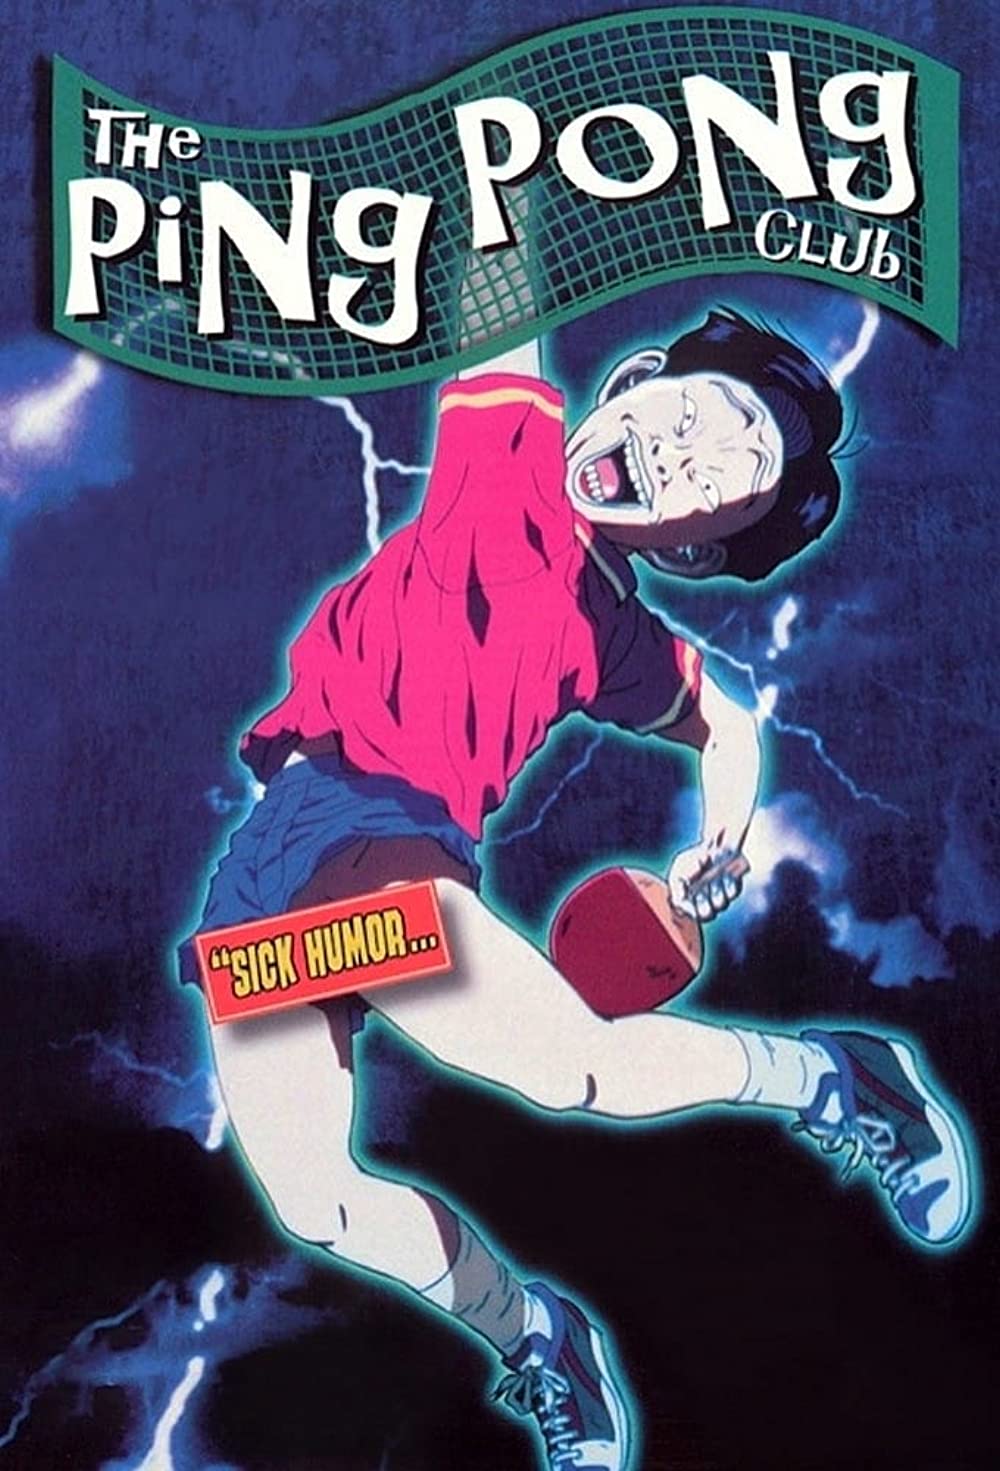 The Ping Pong Club, Dubbing Wikia